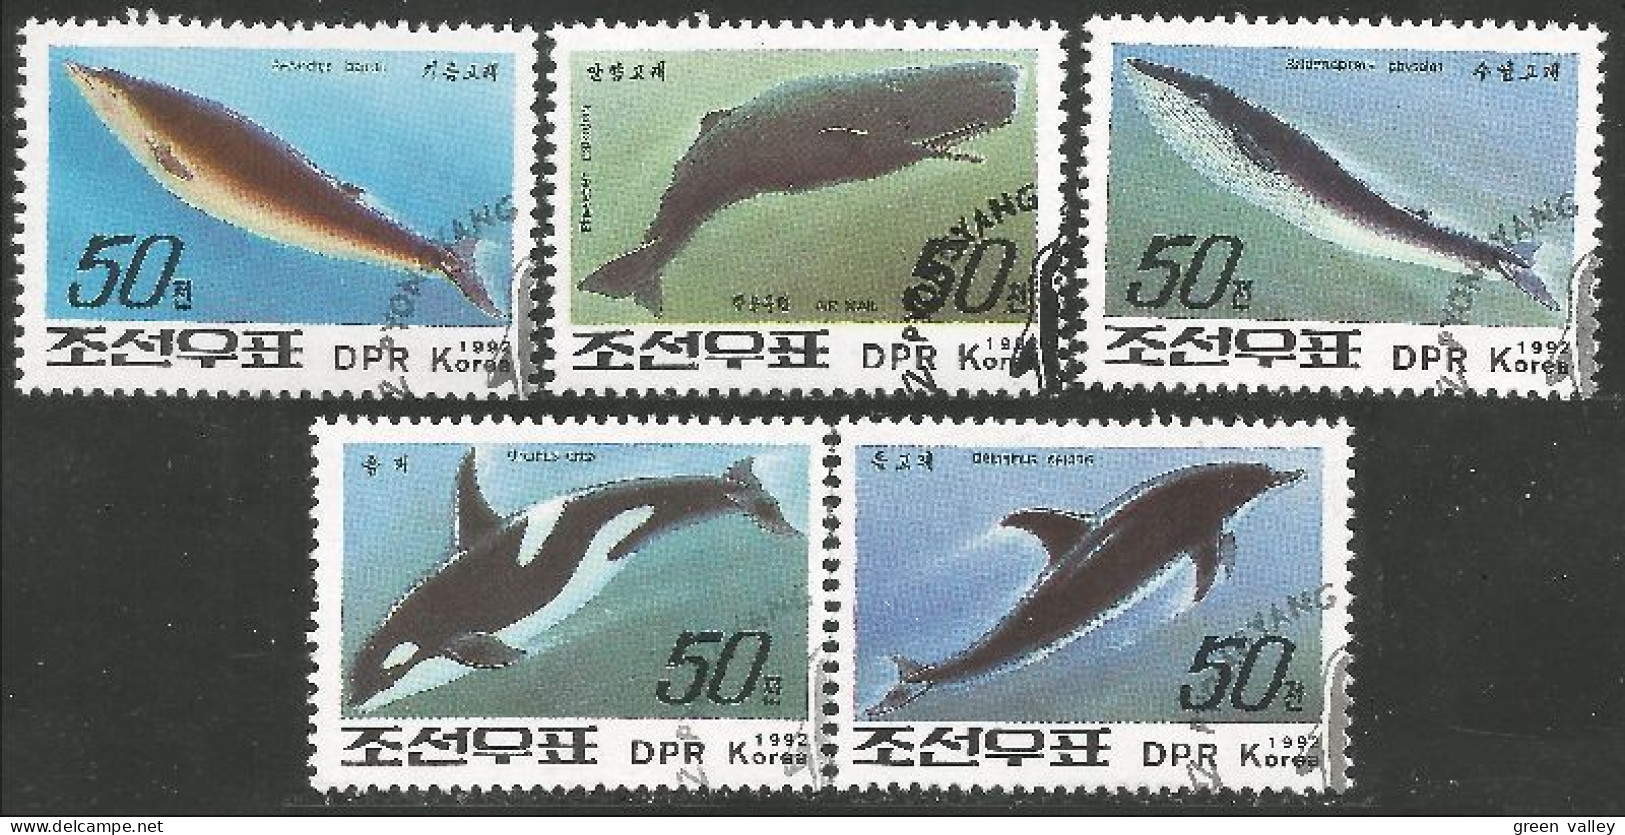 FI-32b Corée Baleine Dauphin Whale Dolphin Wal Delphin Balena Delfino - Whales